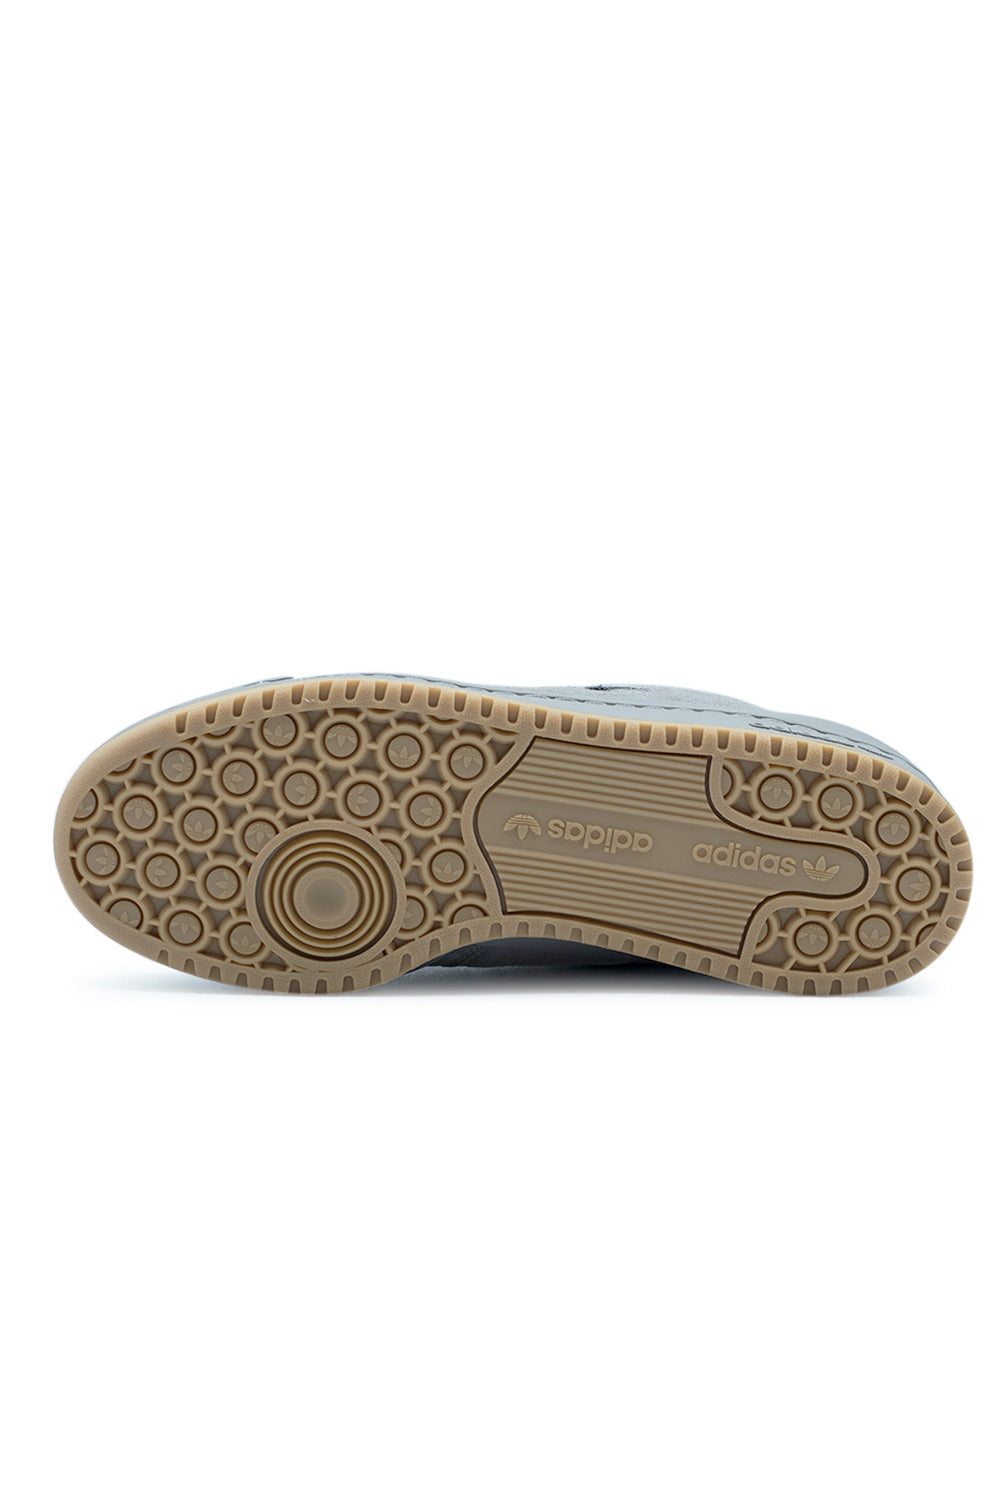 Adidas Forum 84 Low ADV Shoe Grey Four / Carbon / Grey Three - BONKERS